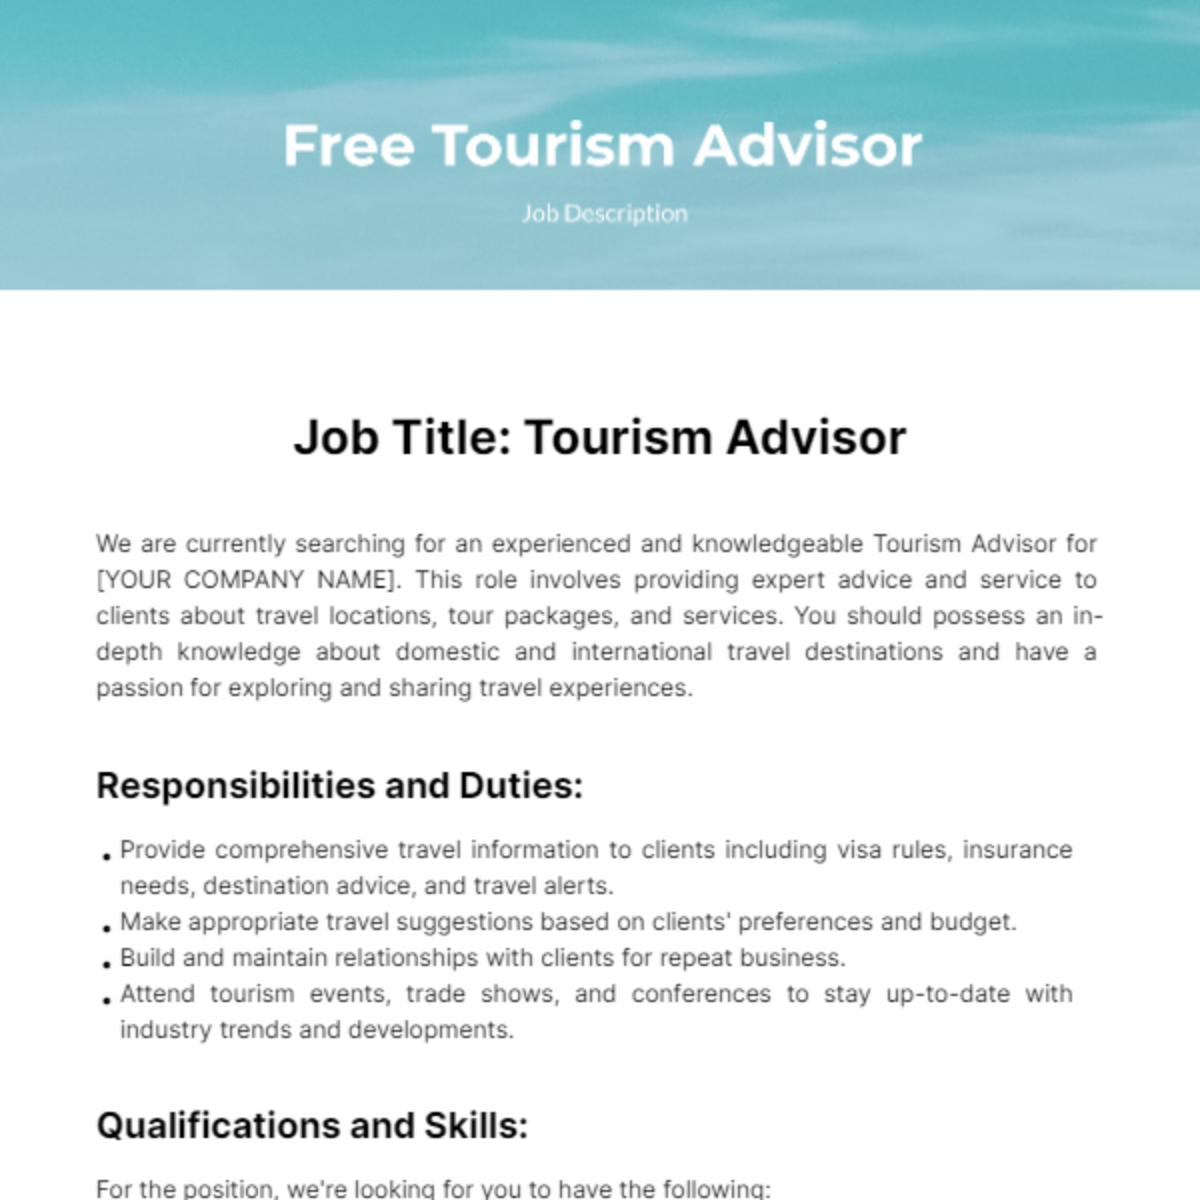 Free Tourism Advisor Job Description Template